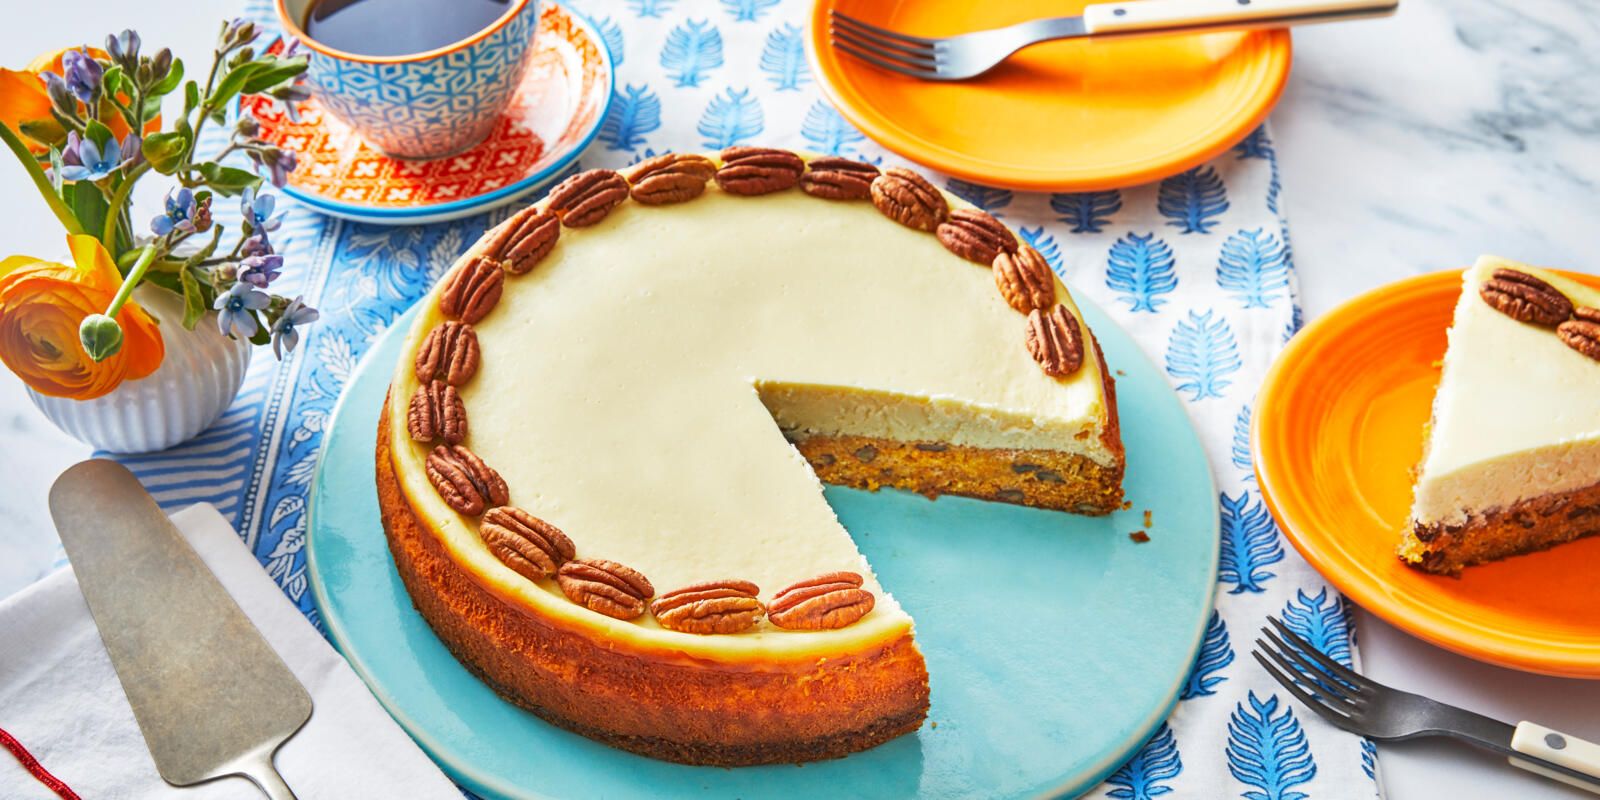 Carrot Cake Cheesecake | The Domestic Rebel